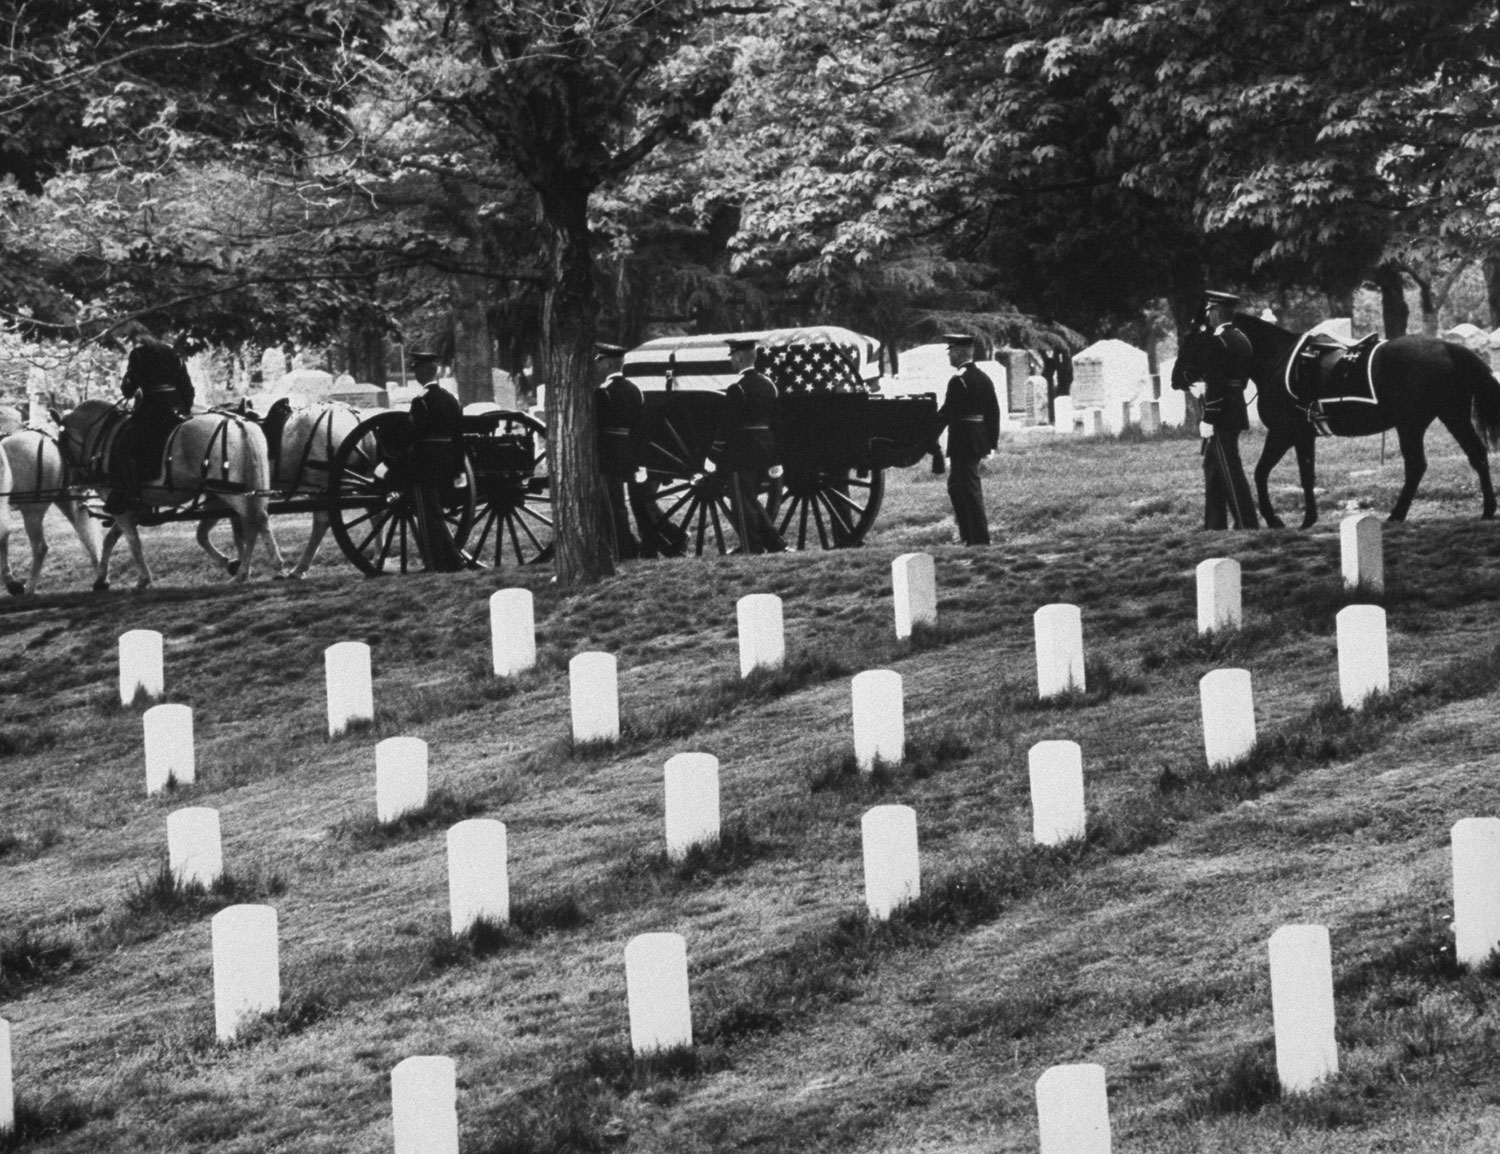 Horses pull a caisson through Arlington National Cemetery, 1965.